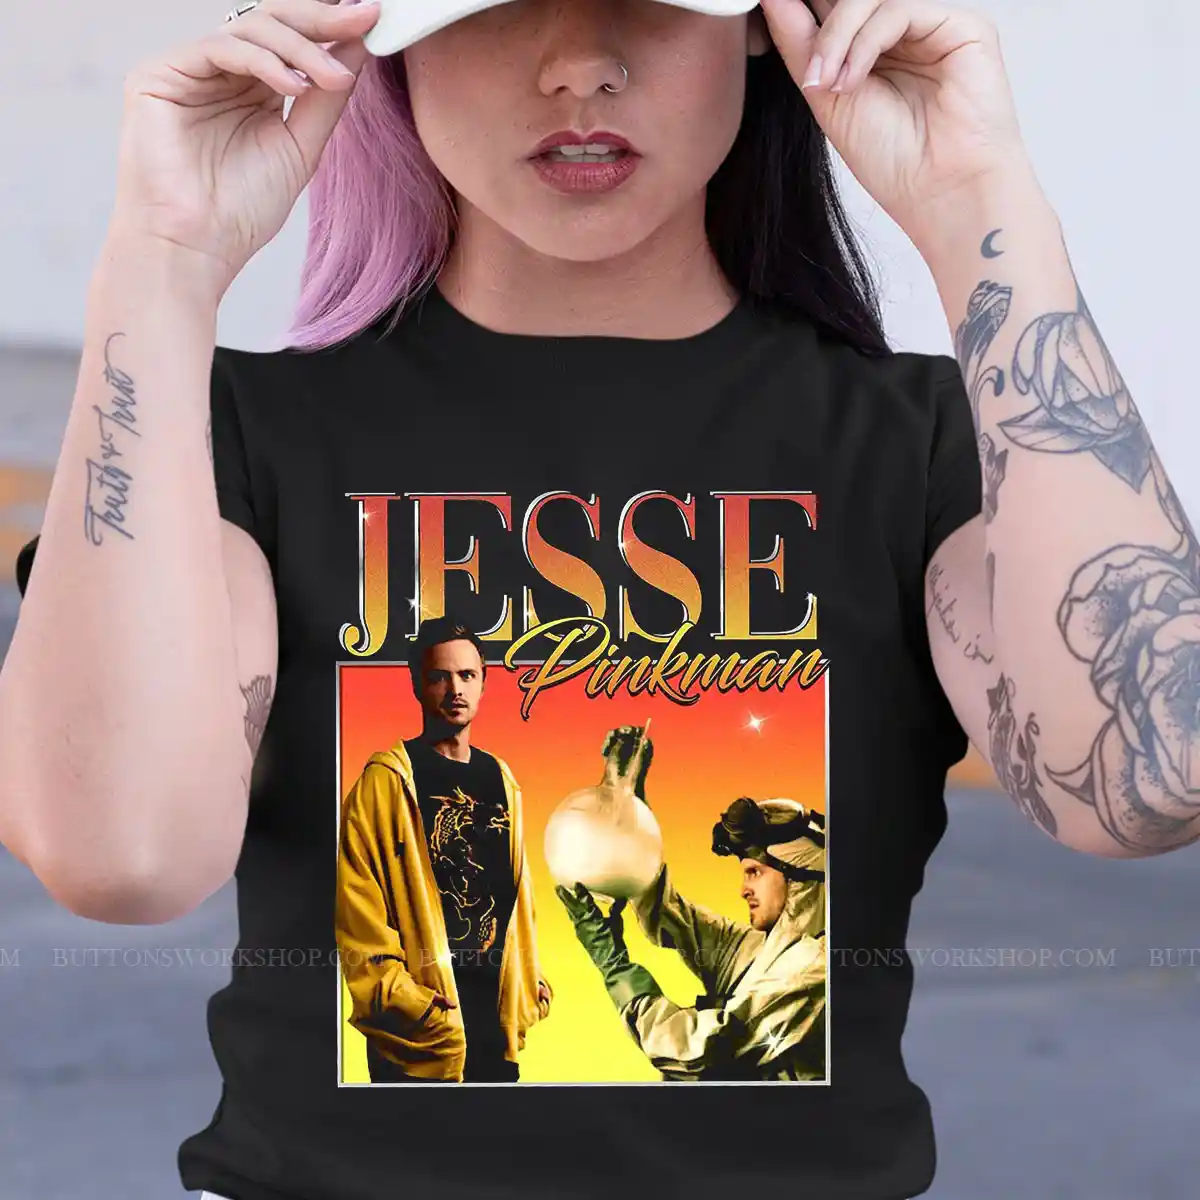 Jesse Pinkman Shirt Unisex Tshirt